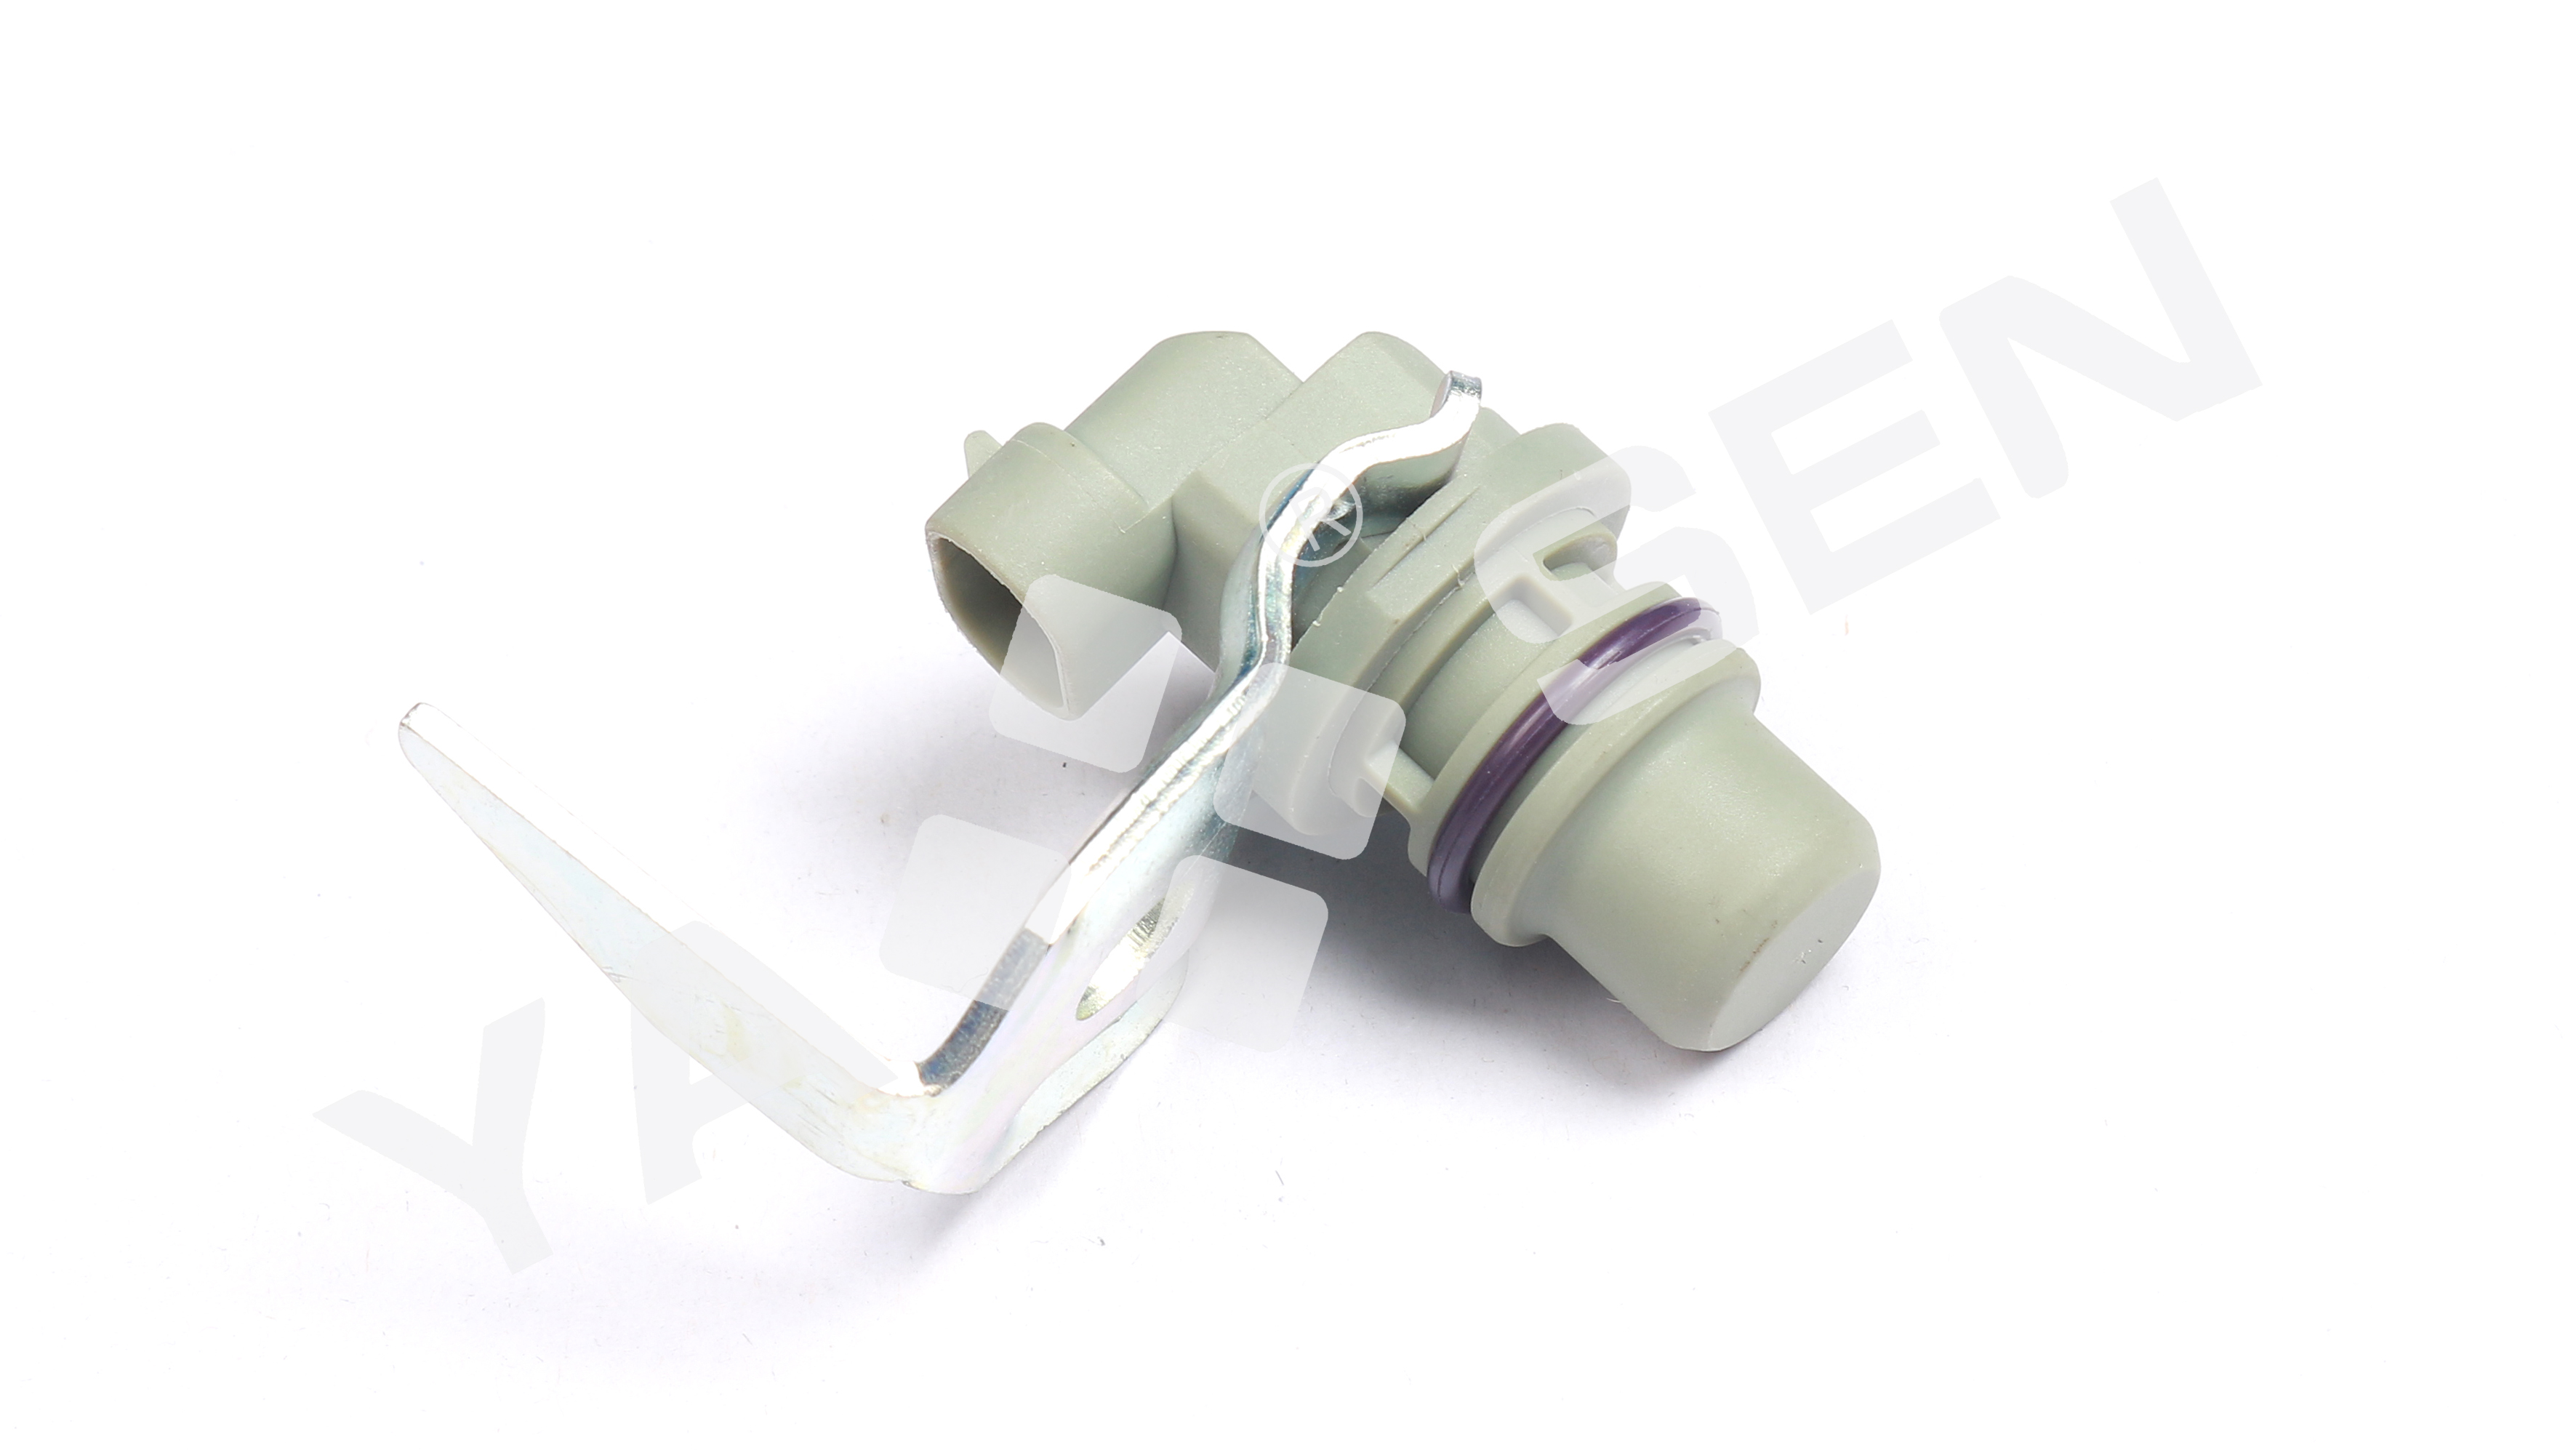 Auto Camshaft position sensor  for FORD, 1876735C91 1876736C91 1825899C93 F7TZ12K073B F7TZ12K073A PC603 SU2159 5S1292 PC603 71-4